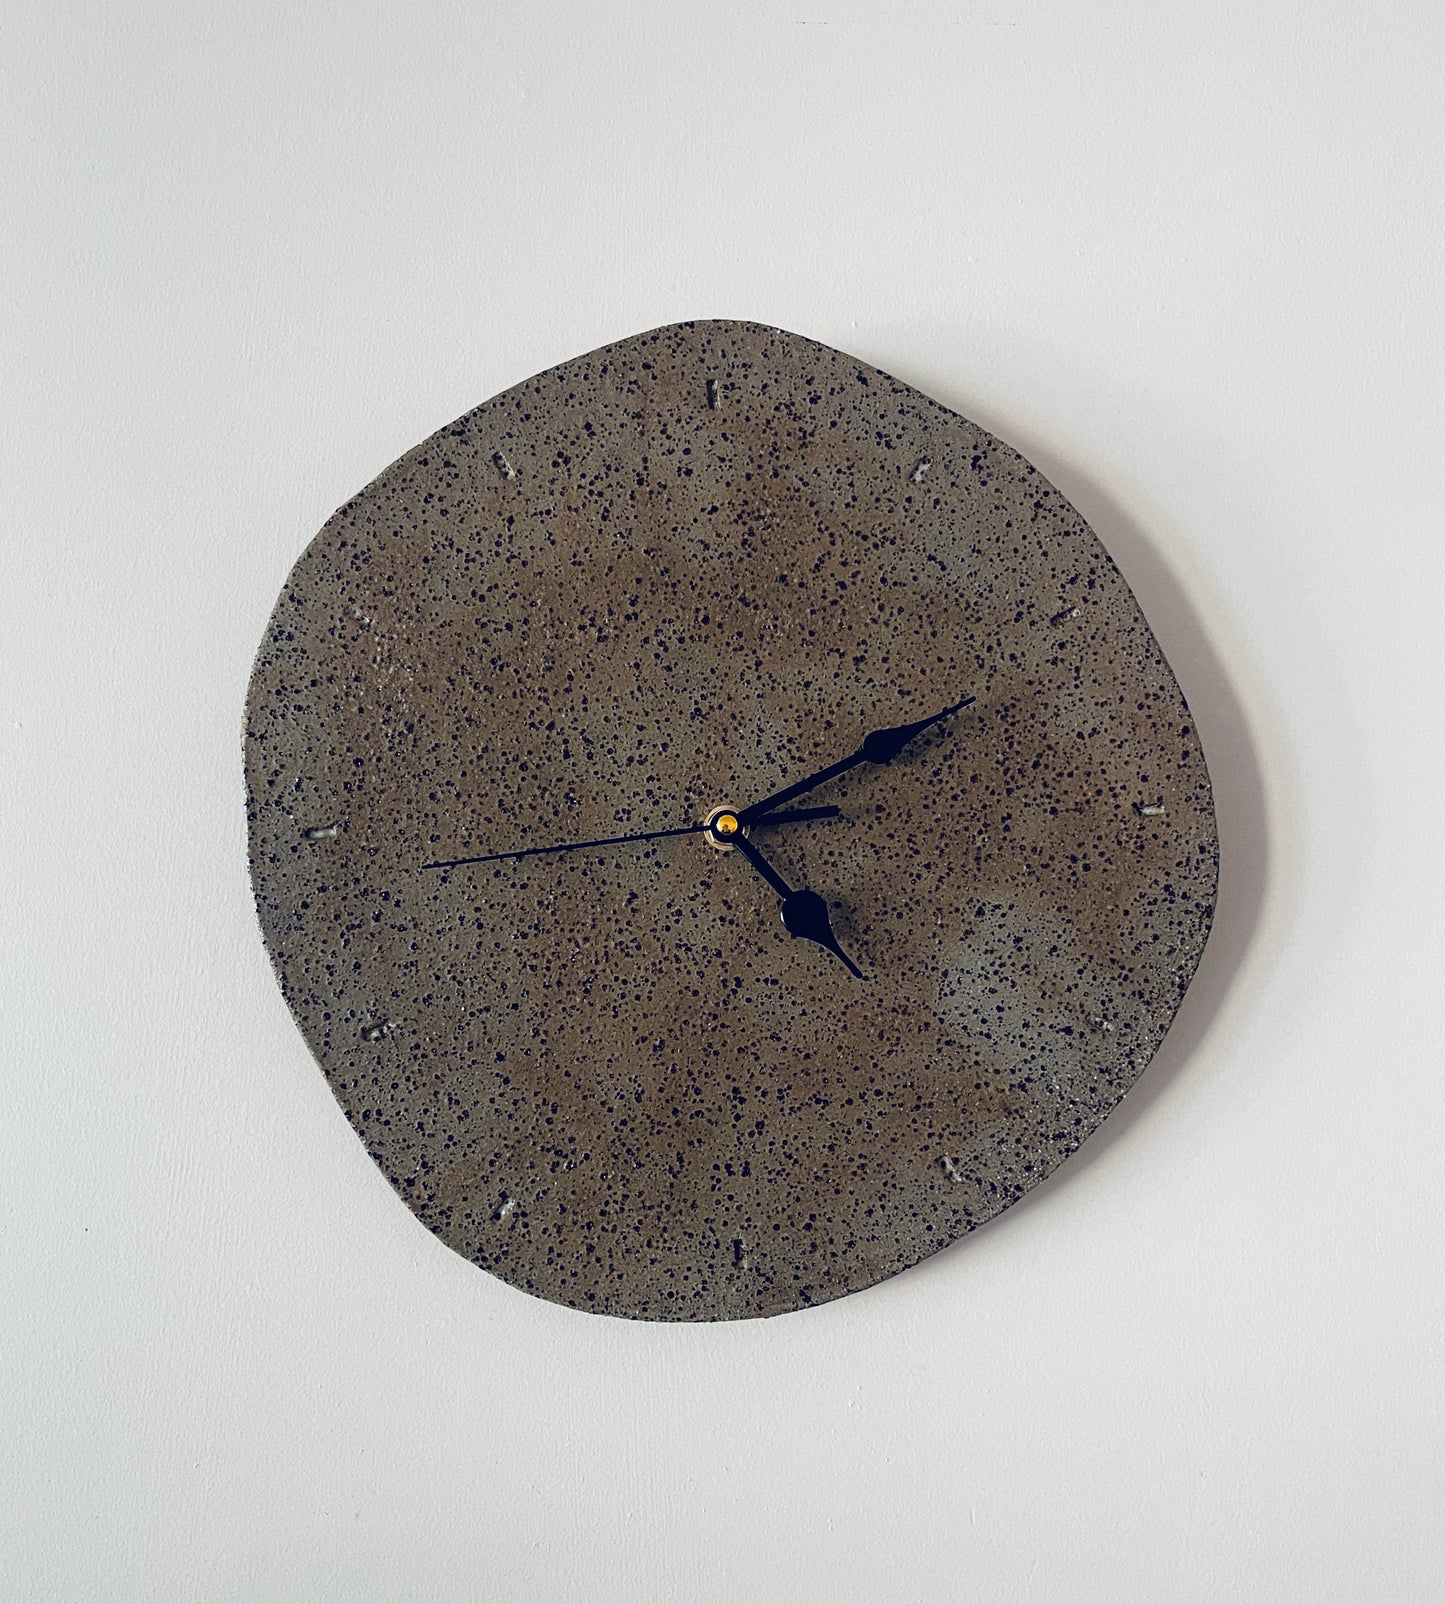 Handmade ceramic clock in speckled brown